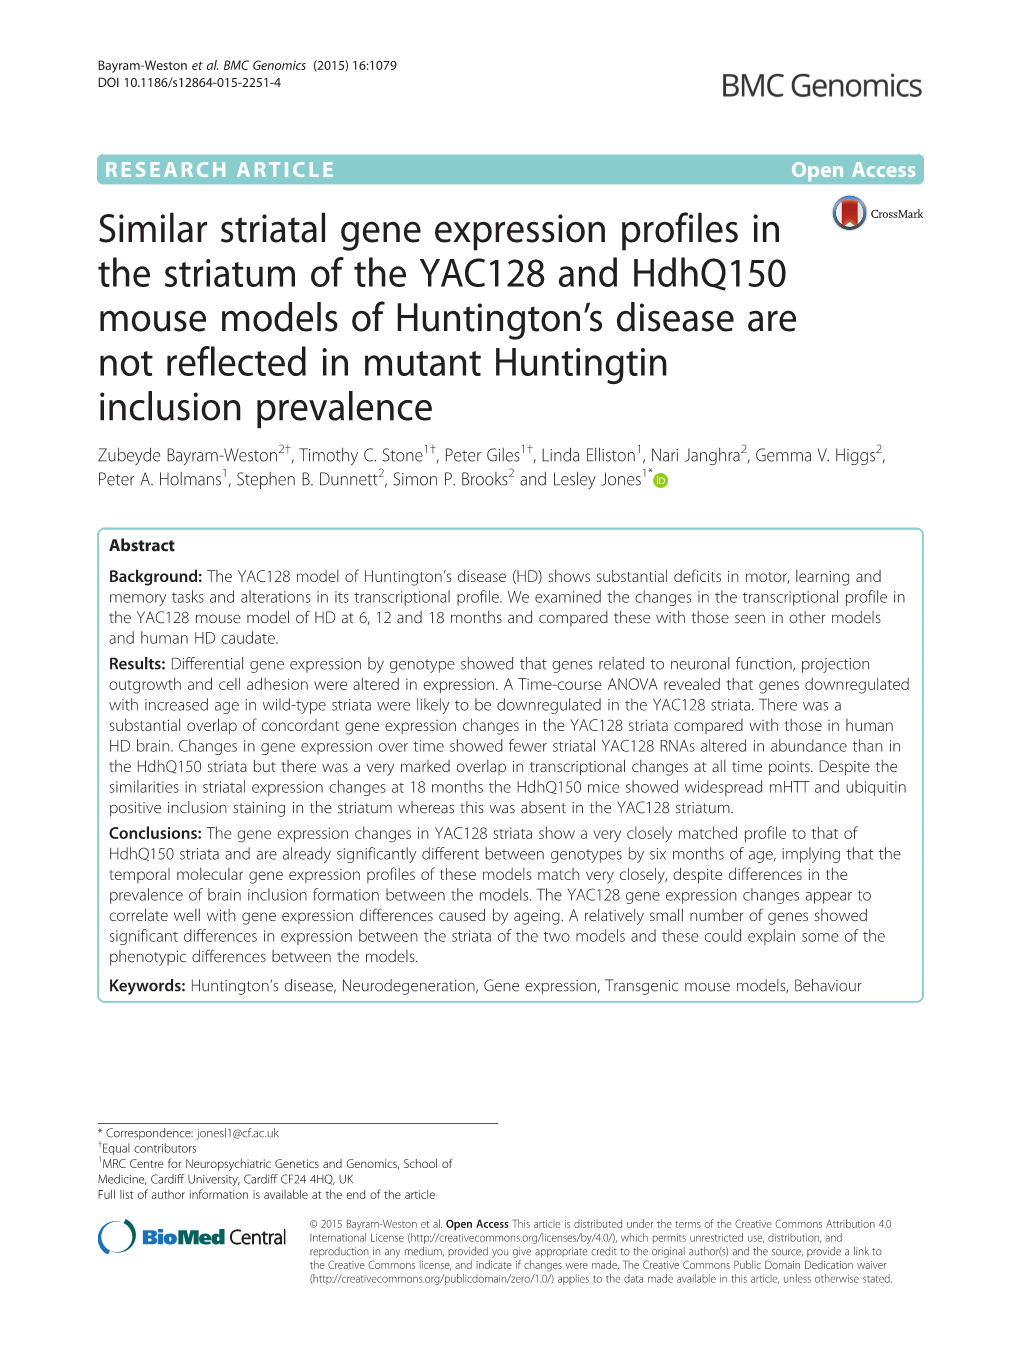 Similar Striatal Gene Expression Profiles in the Striatum of The